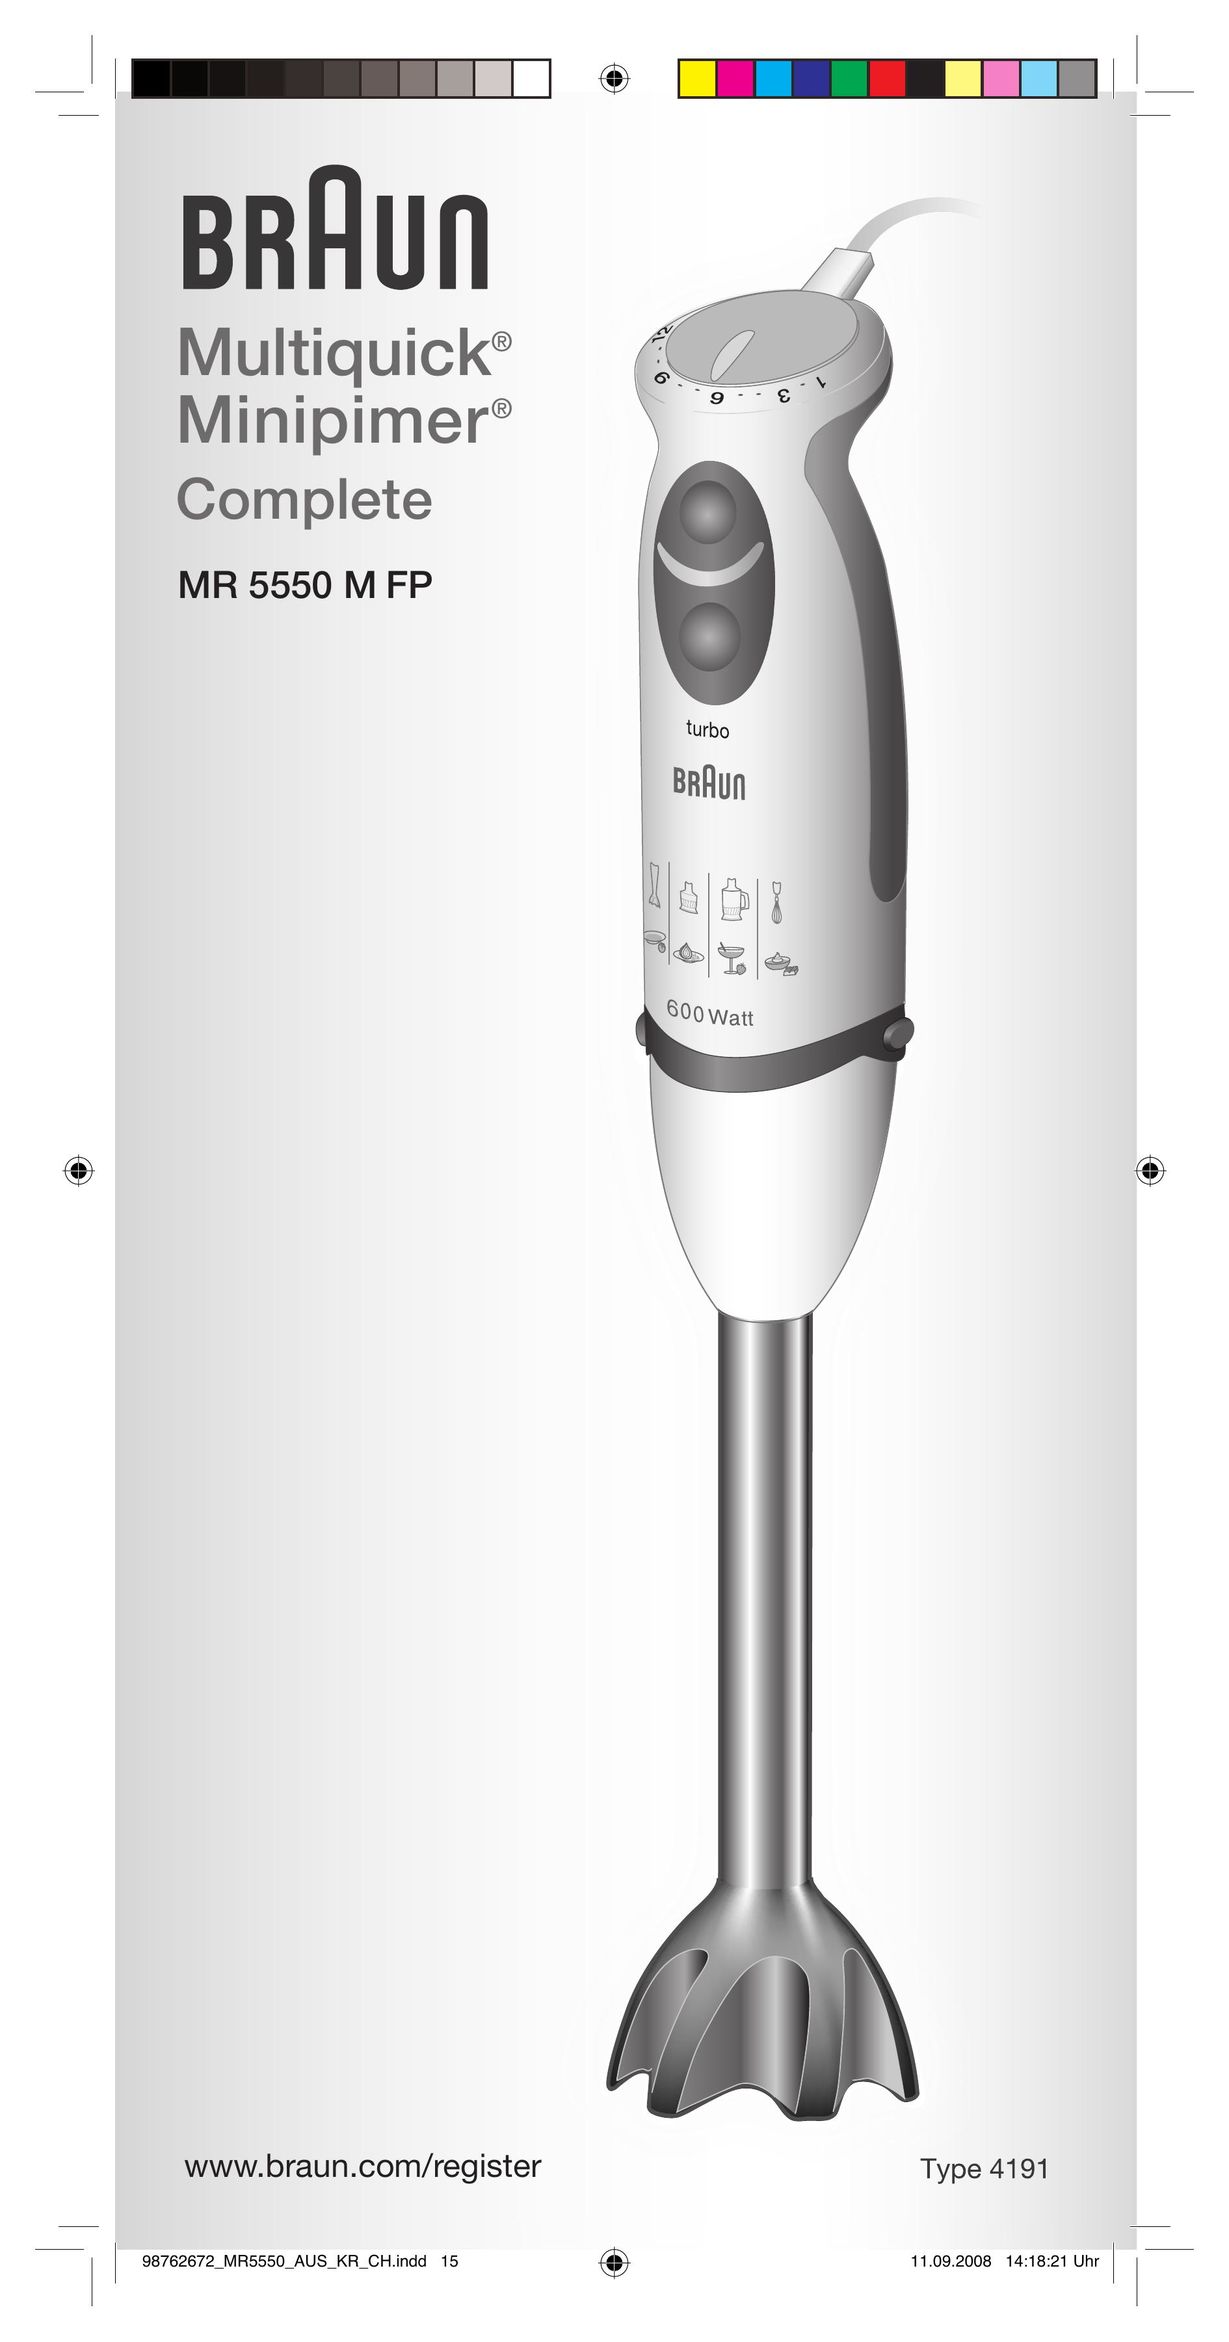 Braun MR 5550 M FP Blender User Manual